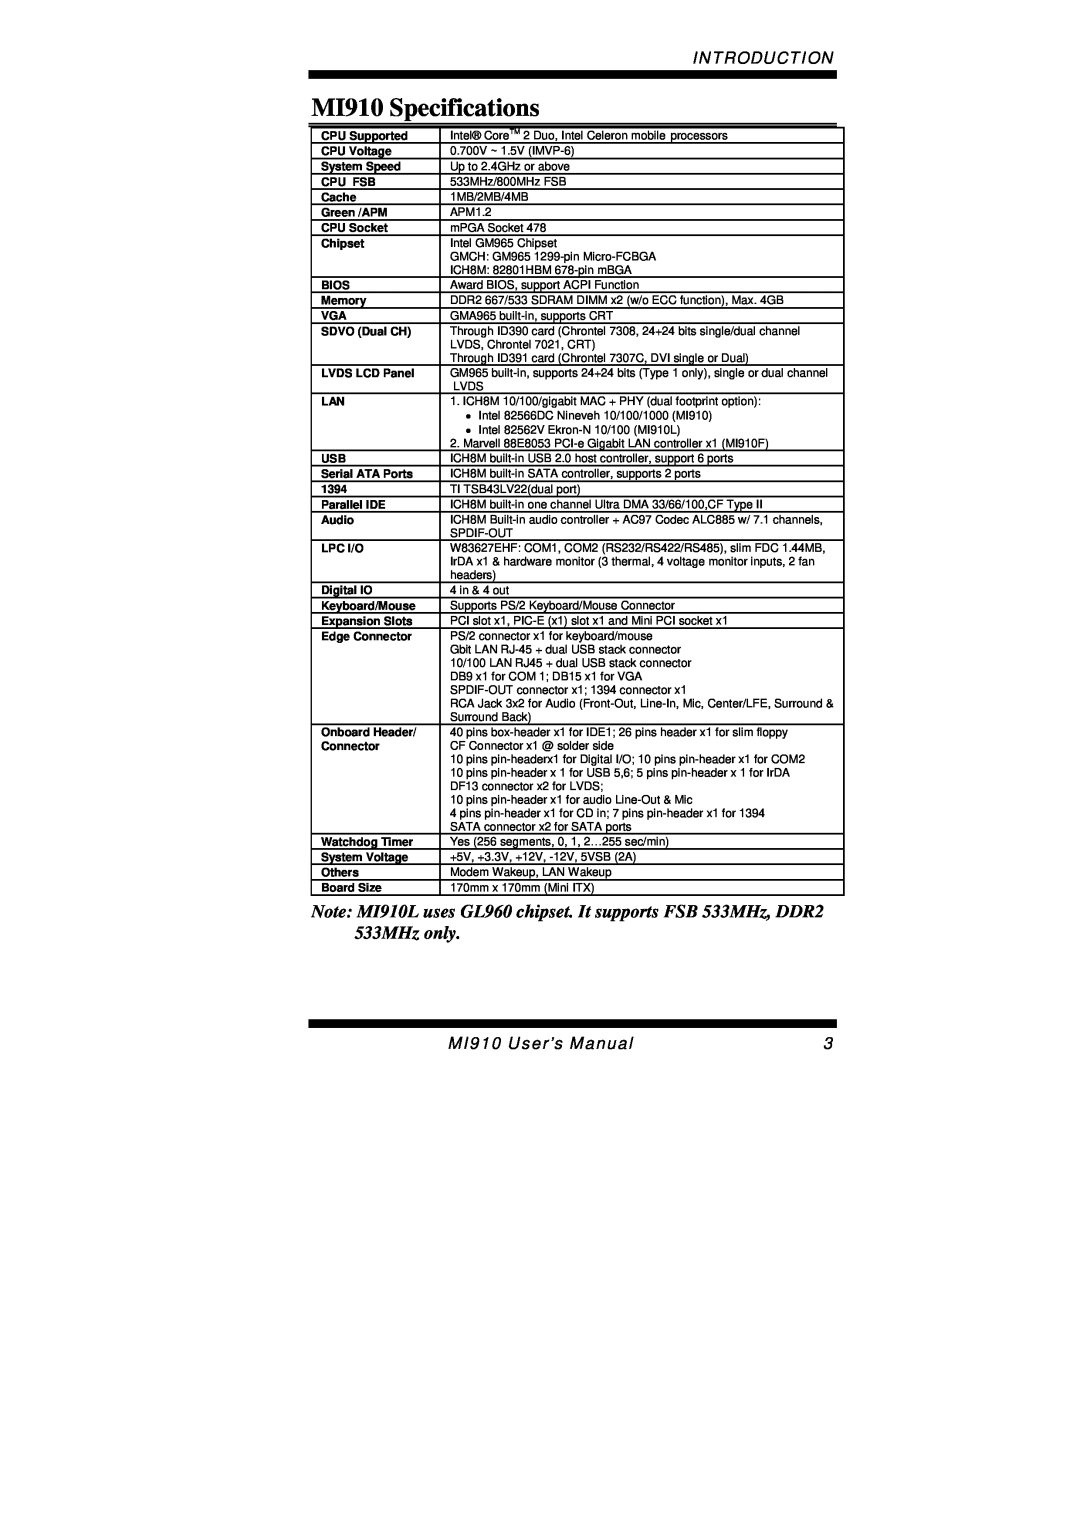 Intel MI910F user manual MI910 Specifications, Introduction, MI910 User’s Manual 